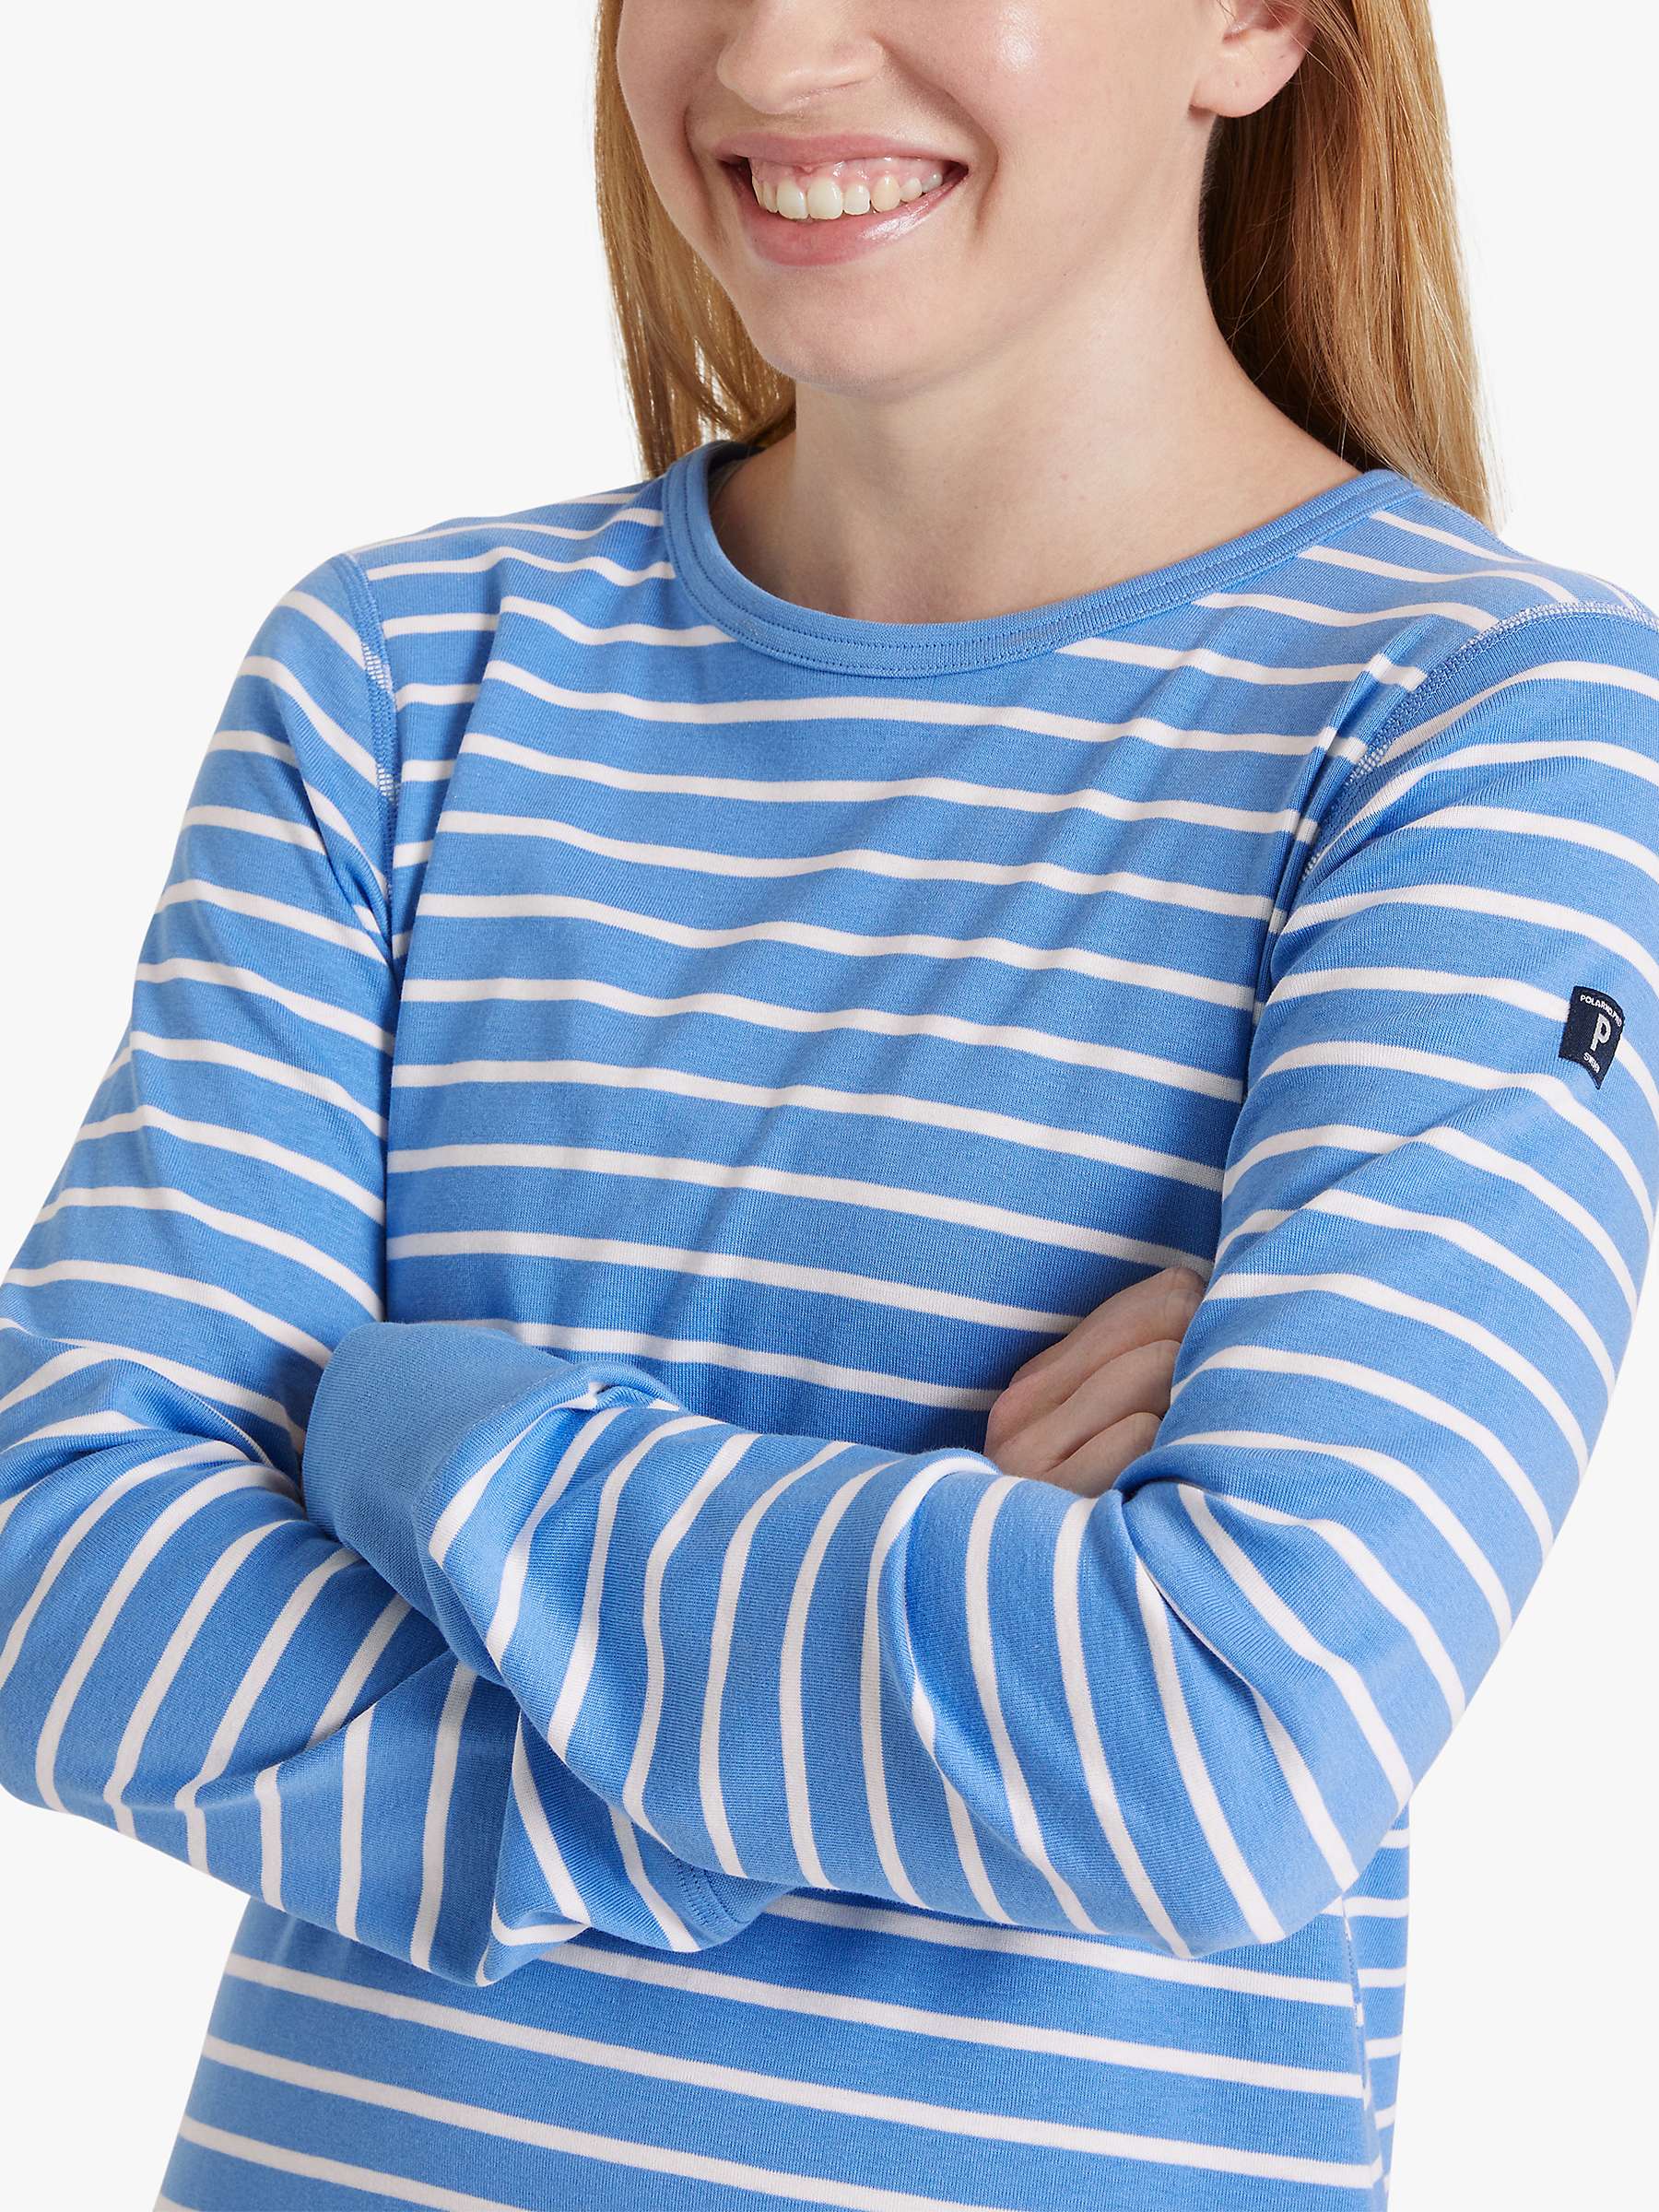 Buy Polarn O. Pyret Adult Organic Cotton Stripe Pyjamas Online at johnlewis.com